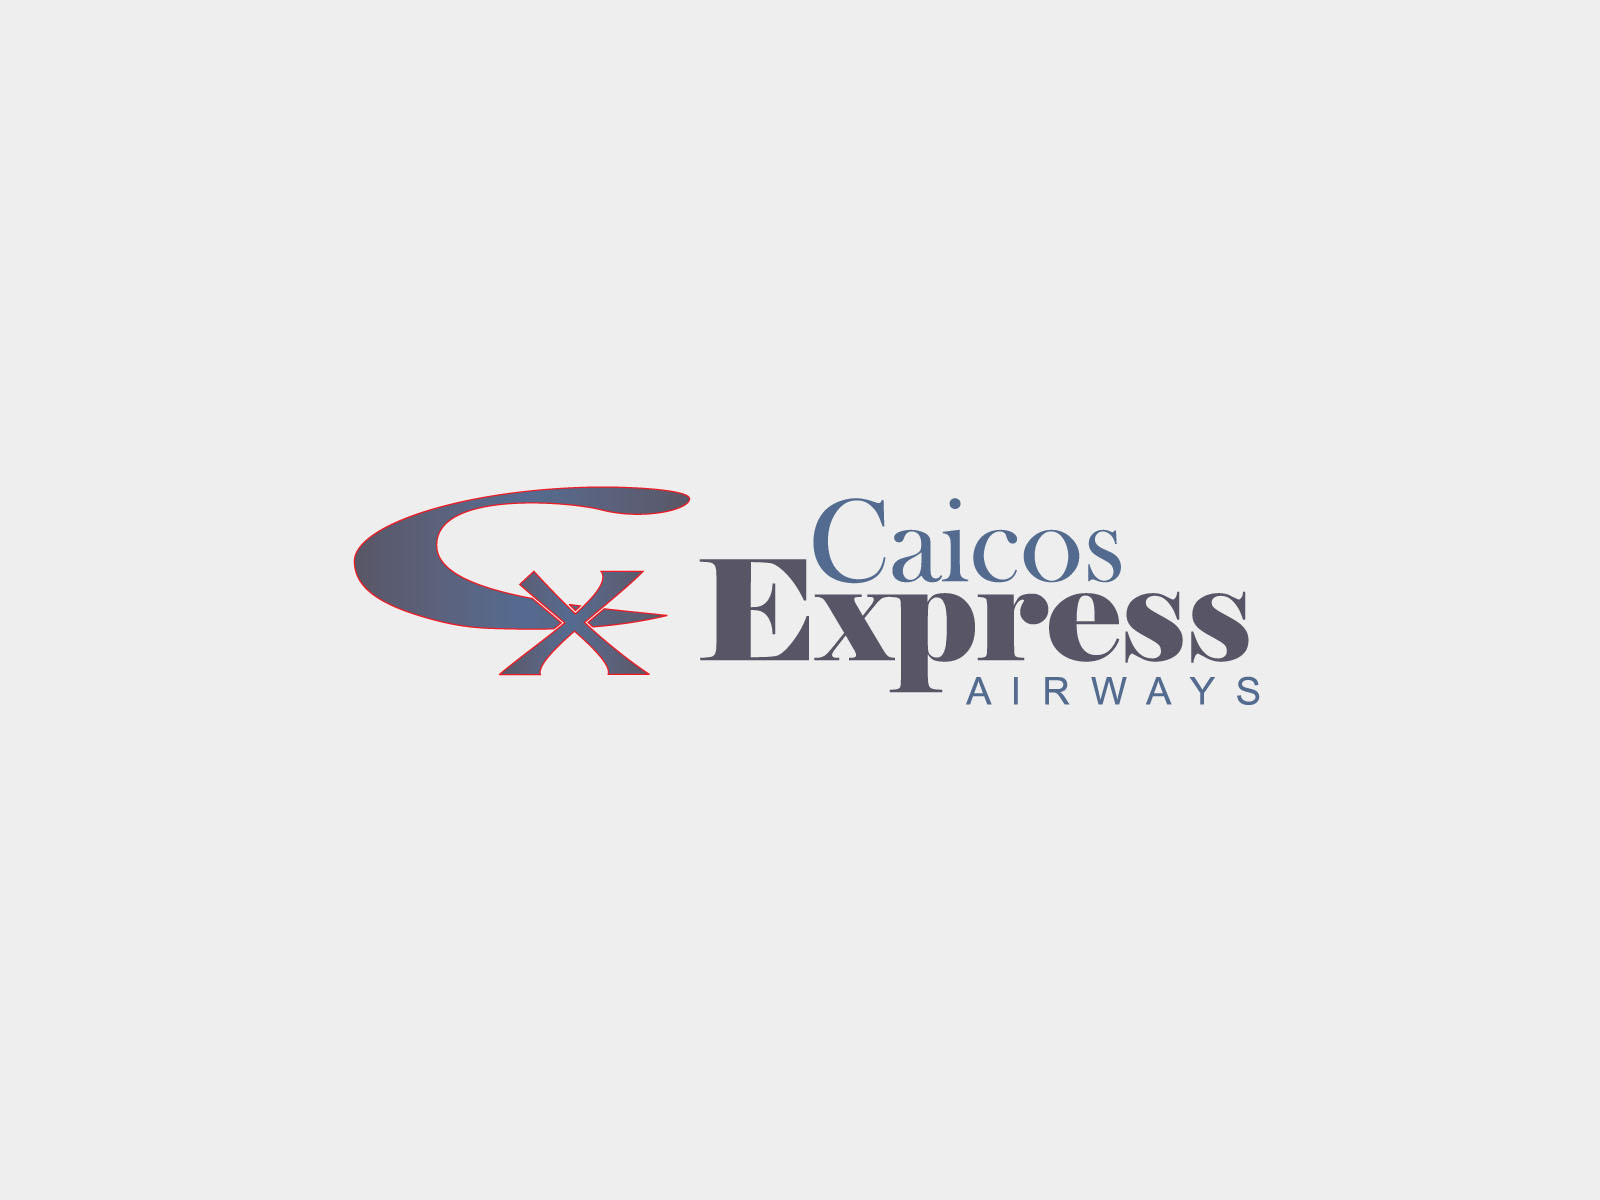 Caicos Express